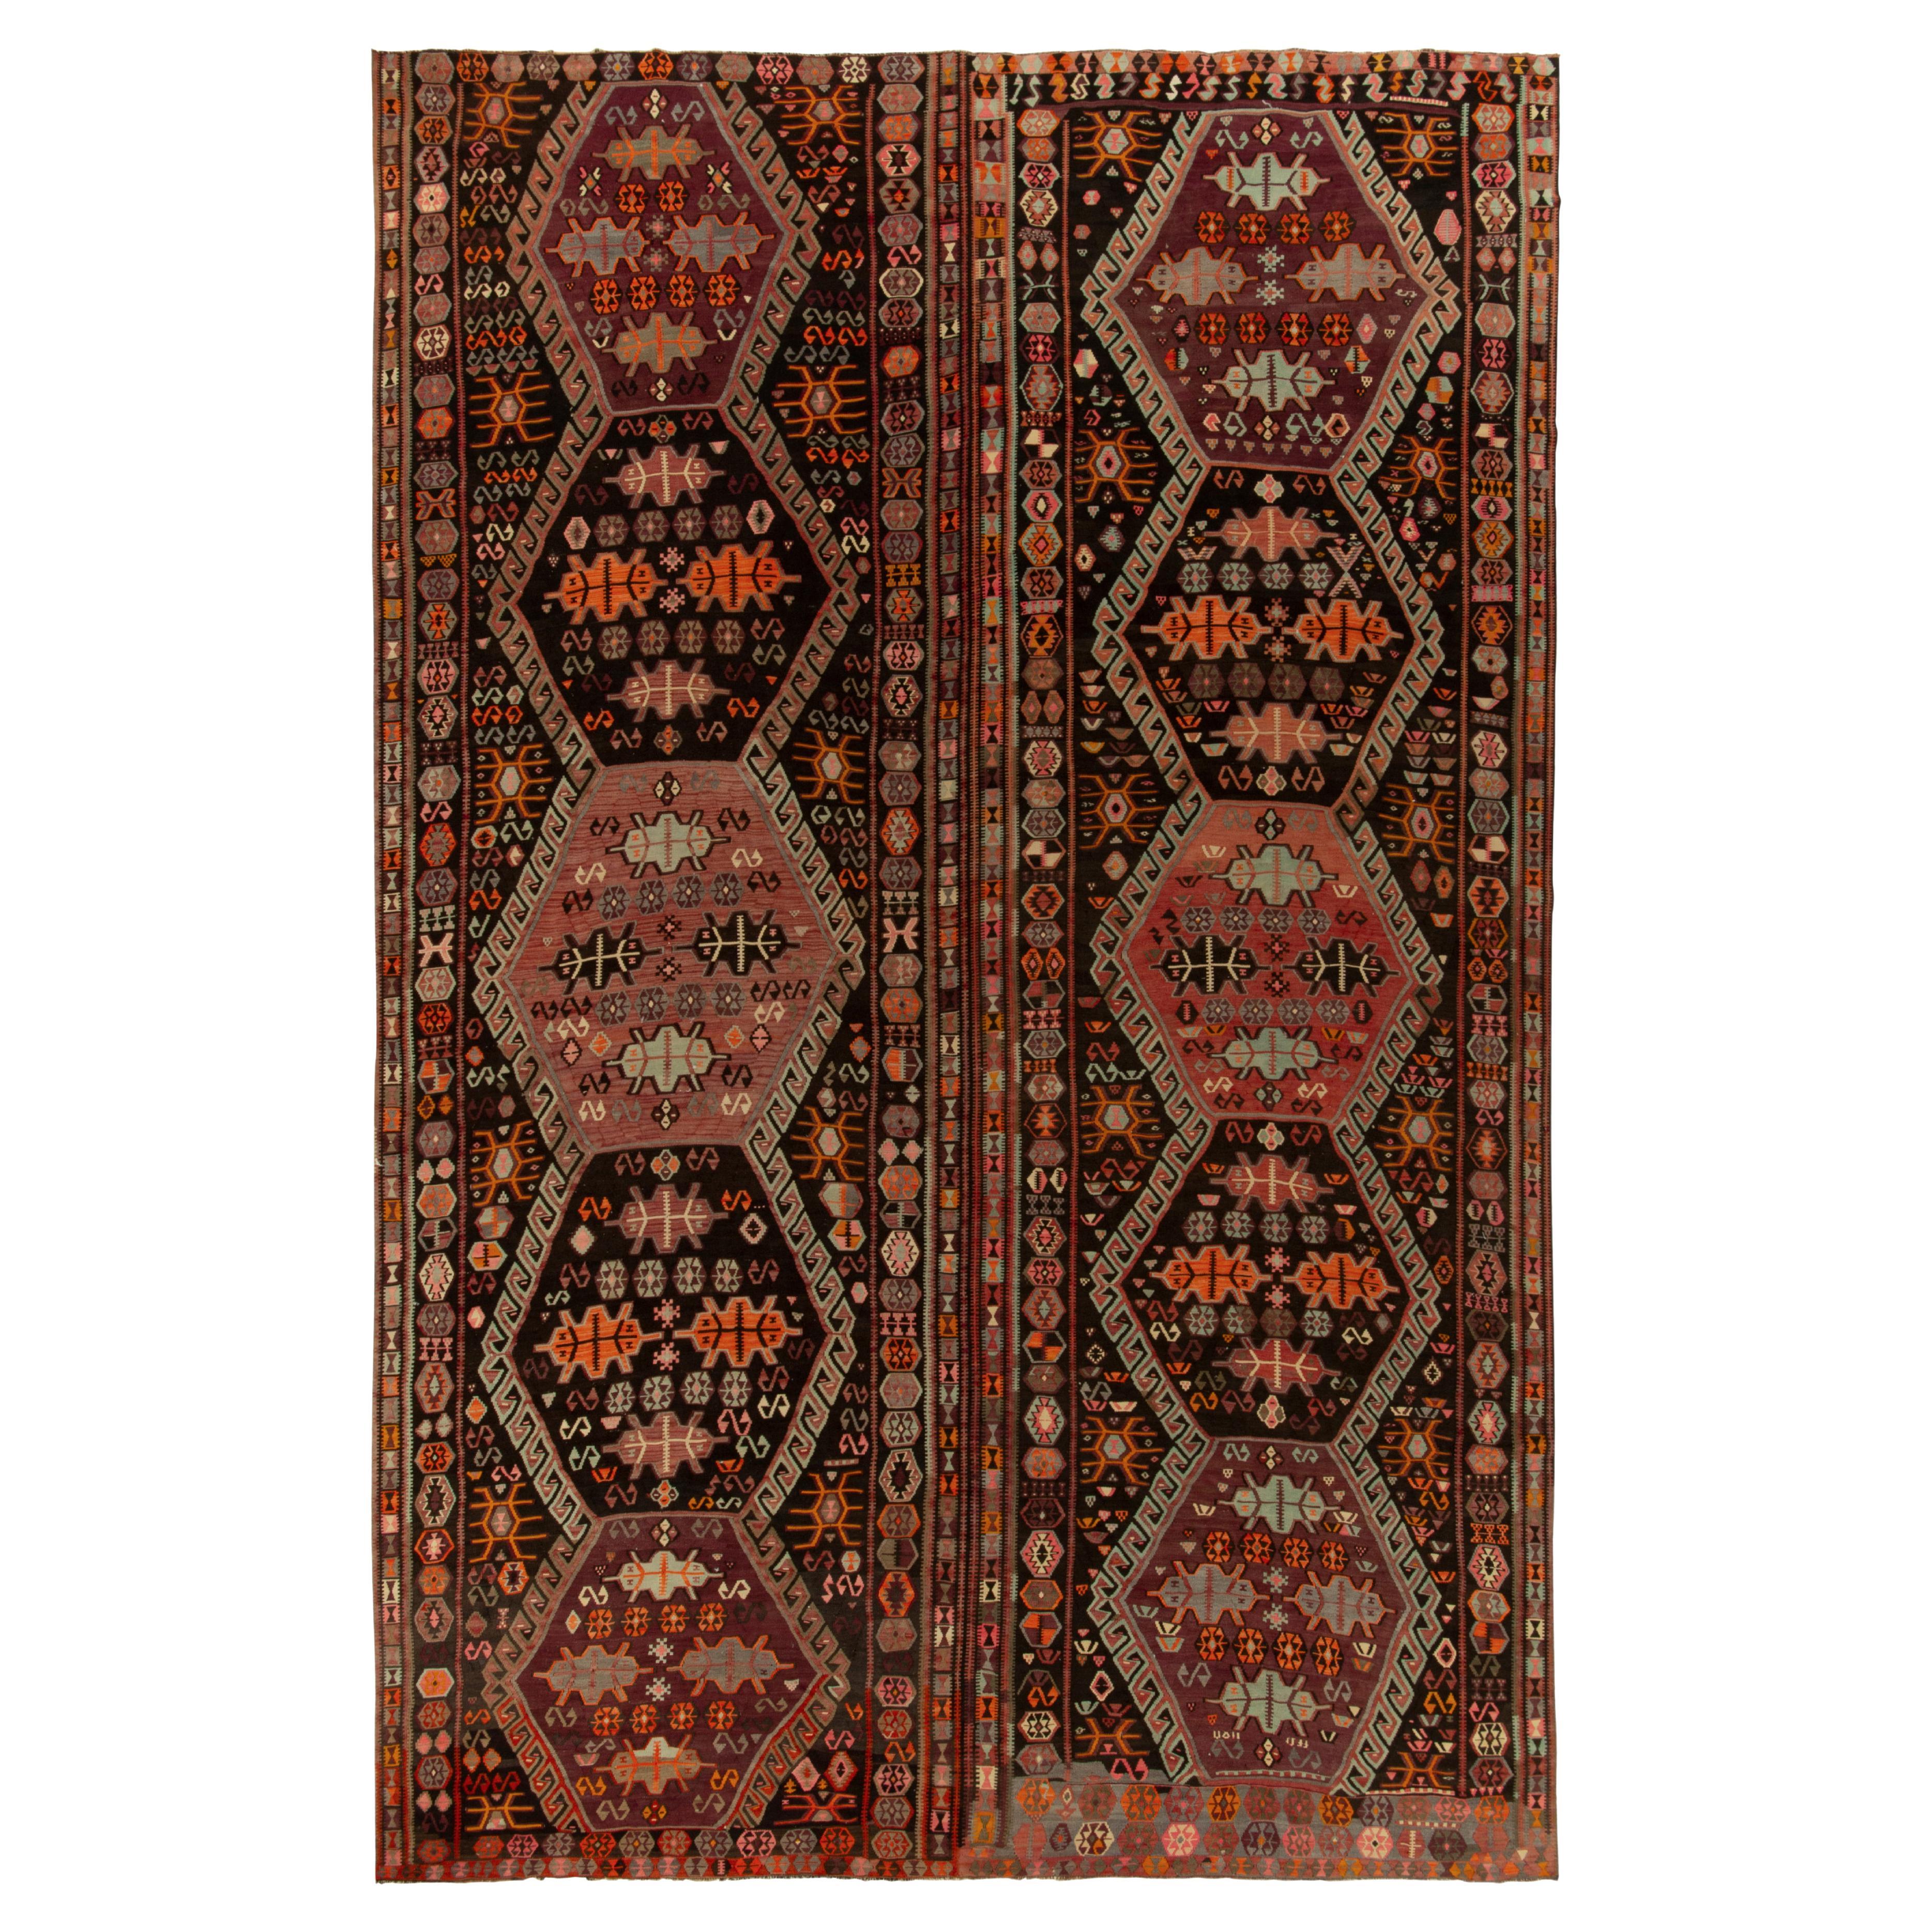 Rare Vintage Kilim Rug in Brown, Orange, Tribal Geometric Pattern by Rug & Kilim For Sale